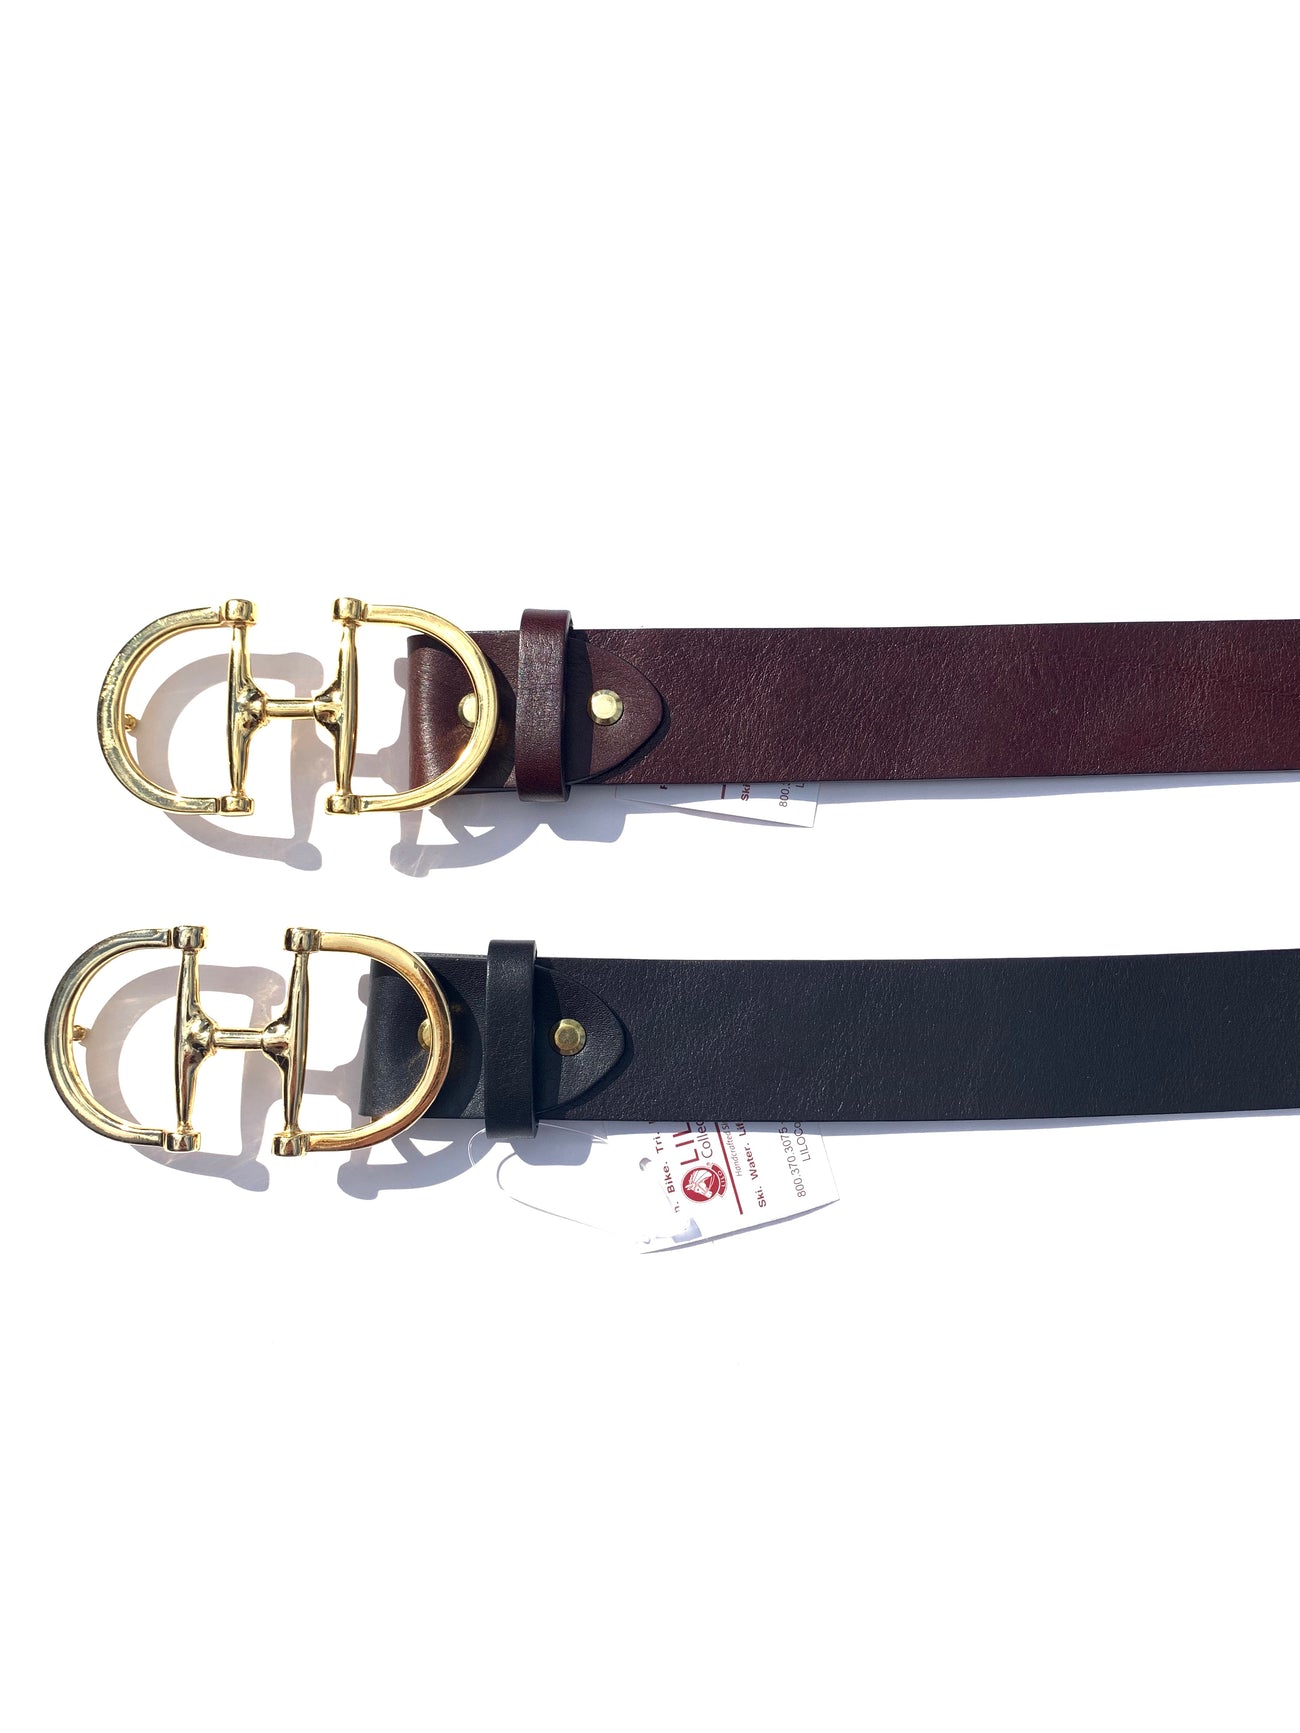 LILO Equestrian Bit belt in vintage leather